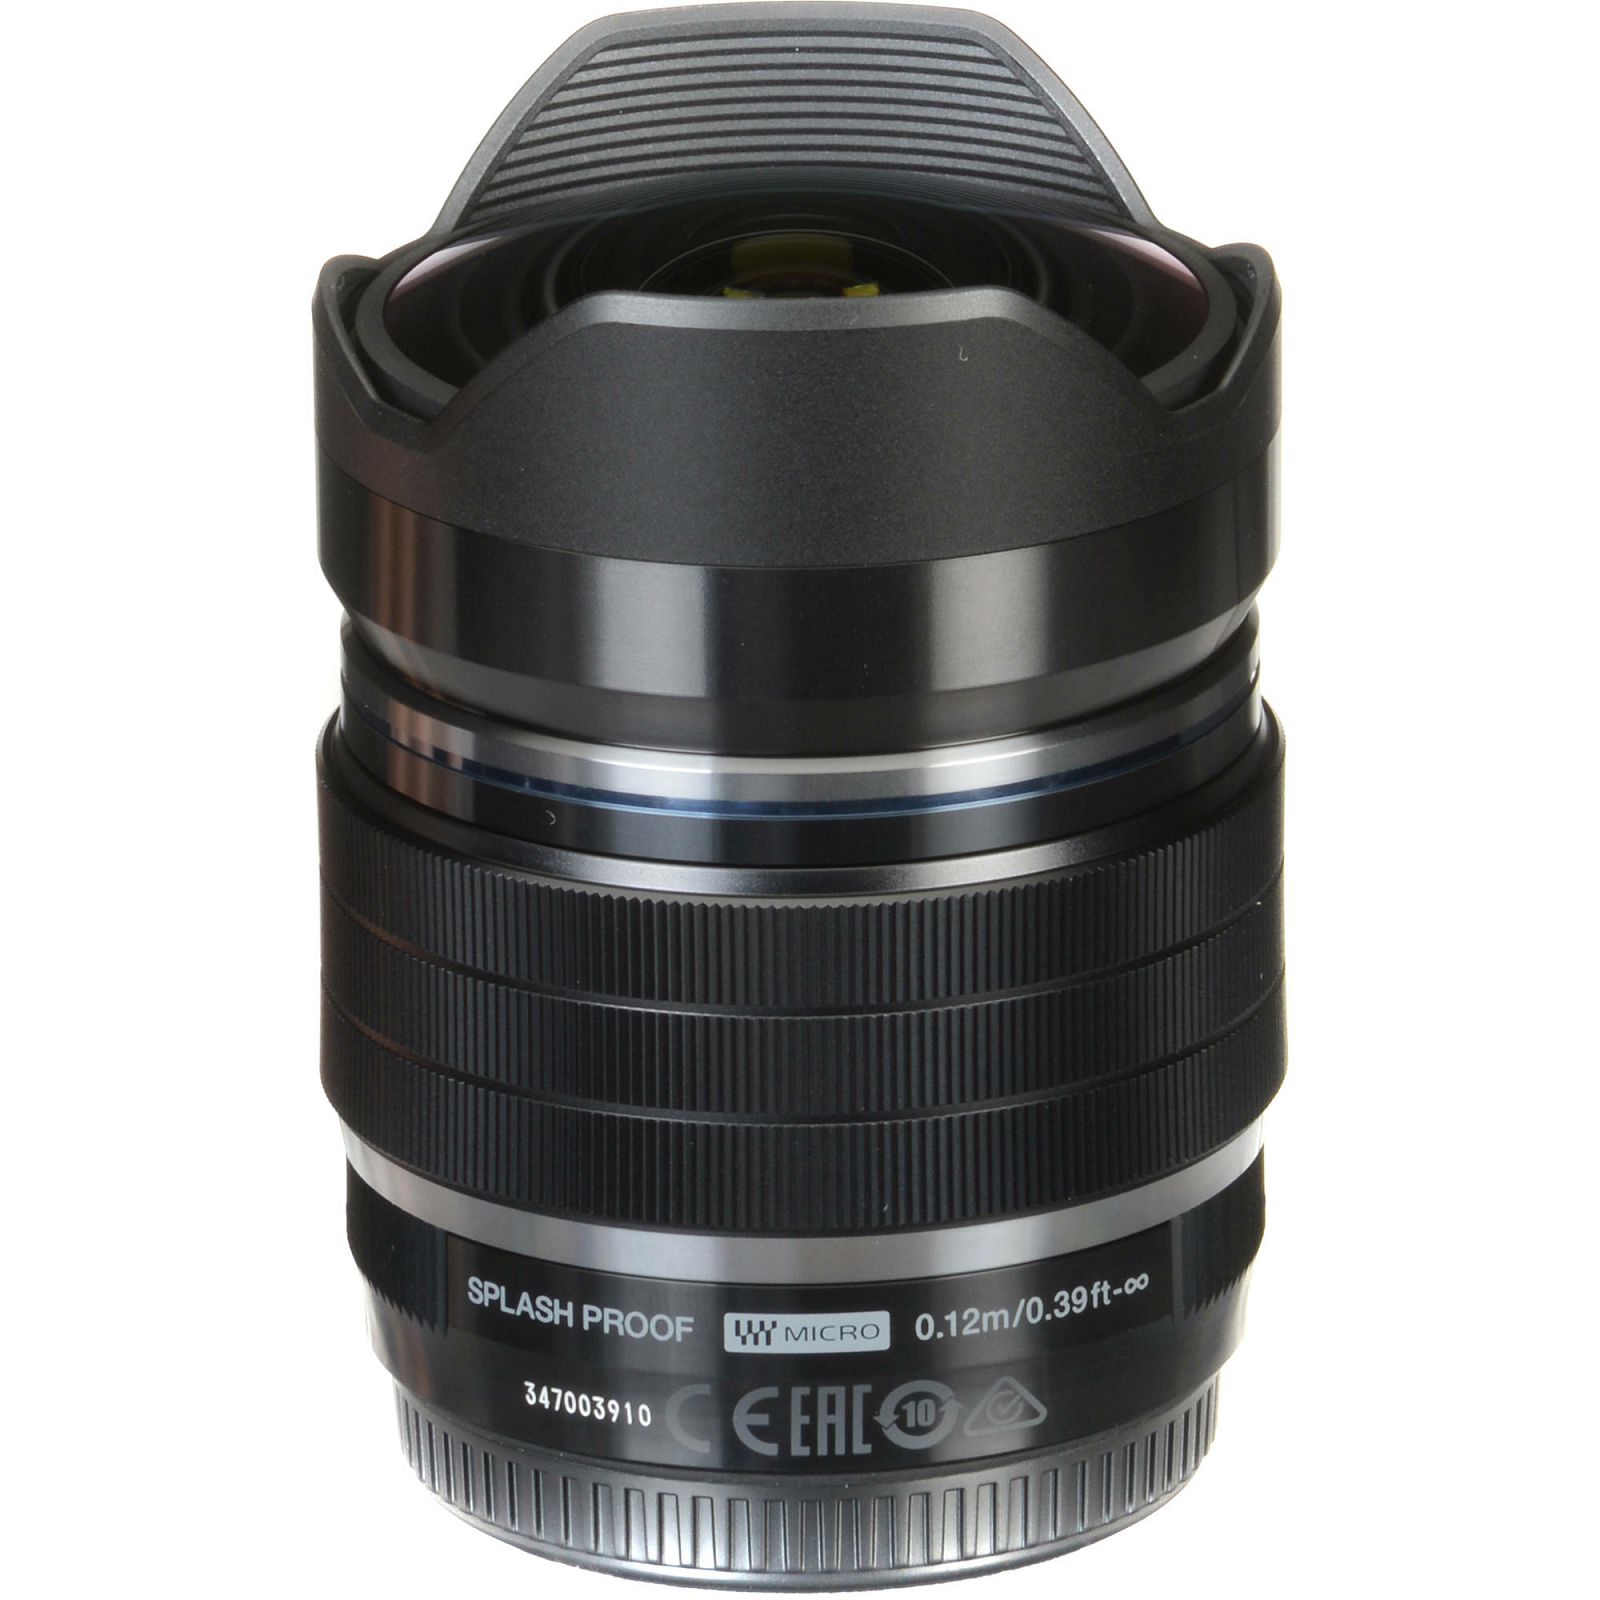 Olympus M. Zuiko Digital 8mm f/1.8 ED PRO Fisheye objektiv fiksne žarišne duljine 1:1.8 F1.8 1.8 fish-eye prime lens Micro Four Thirds MFT micro4/3" (V312030BW000)